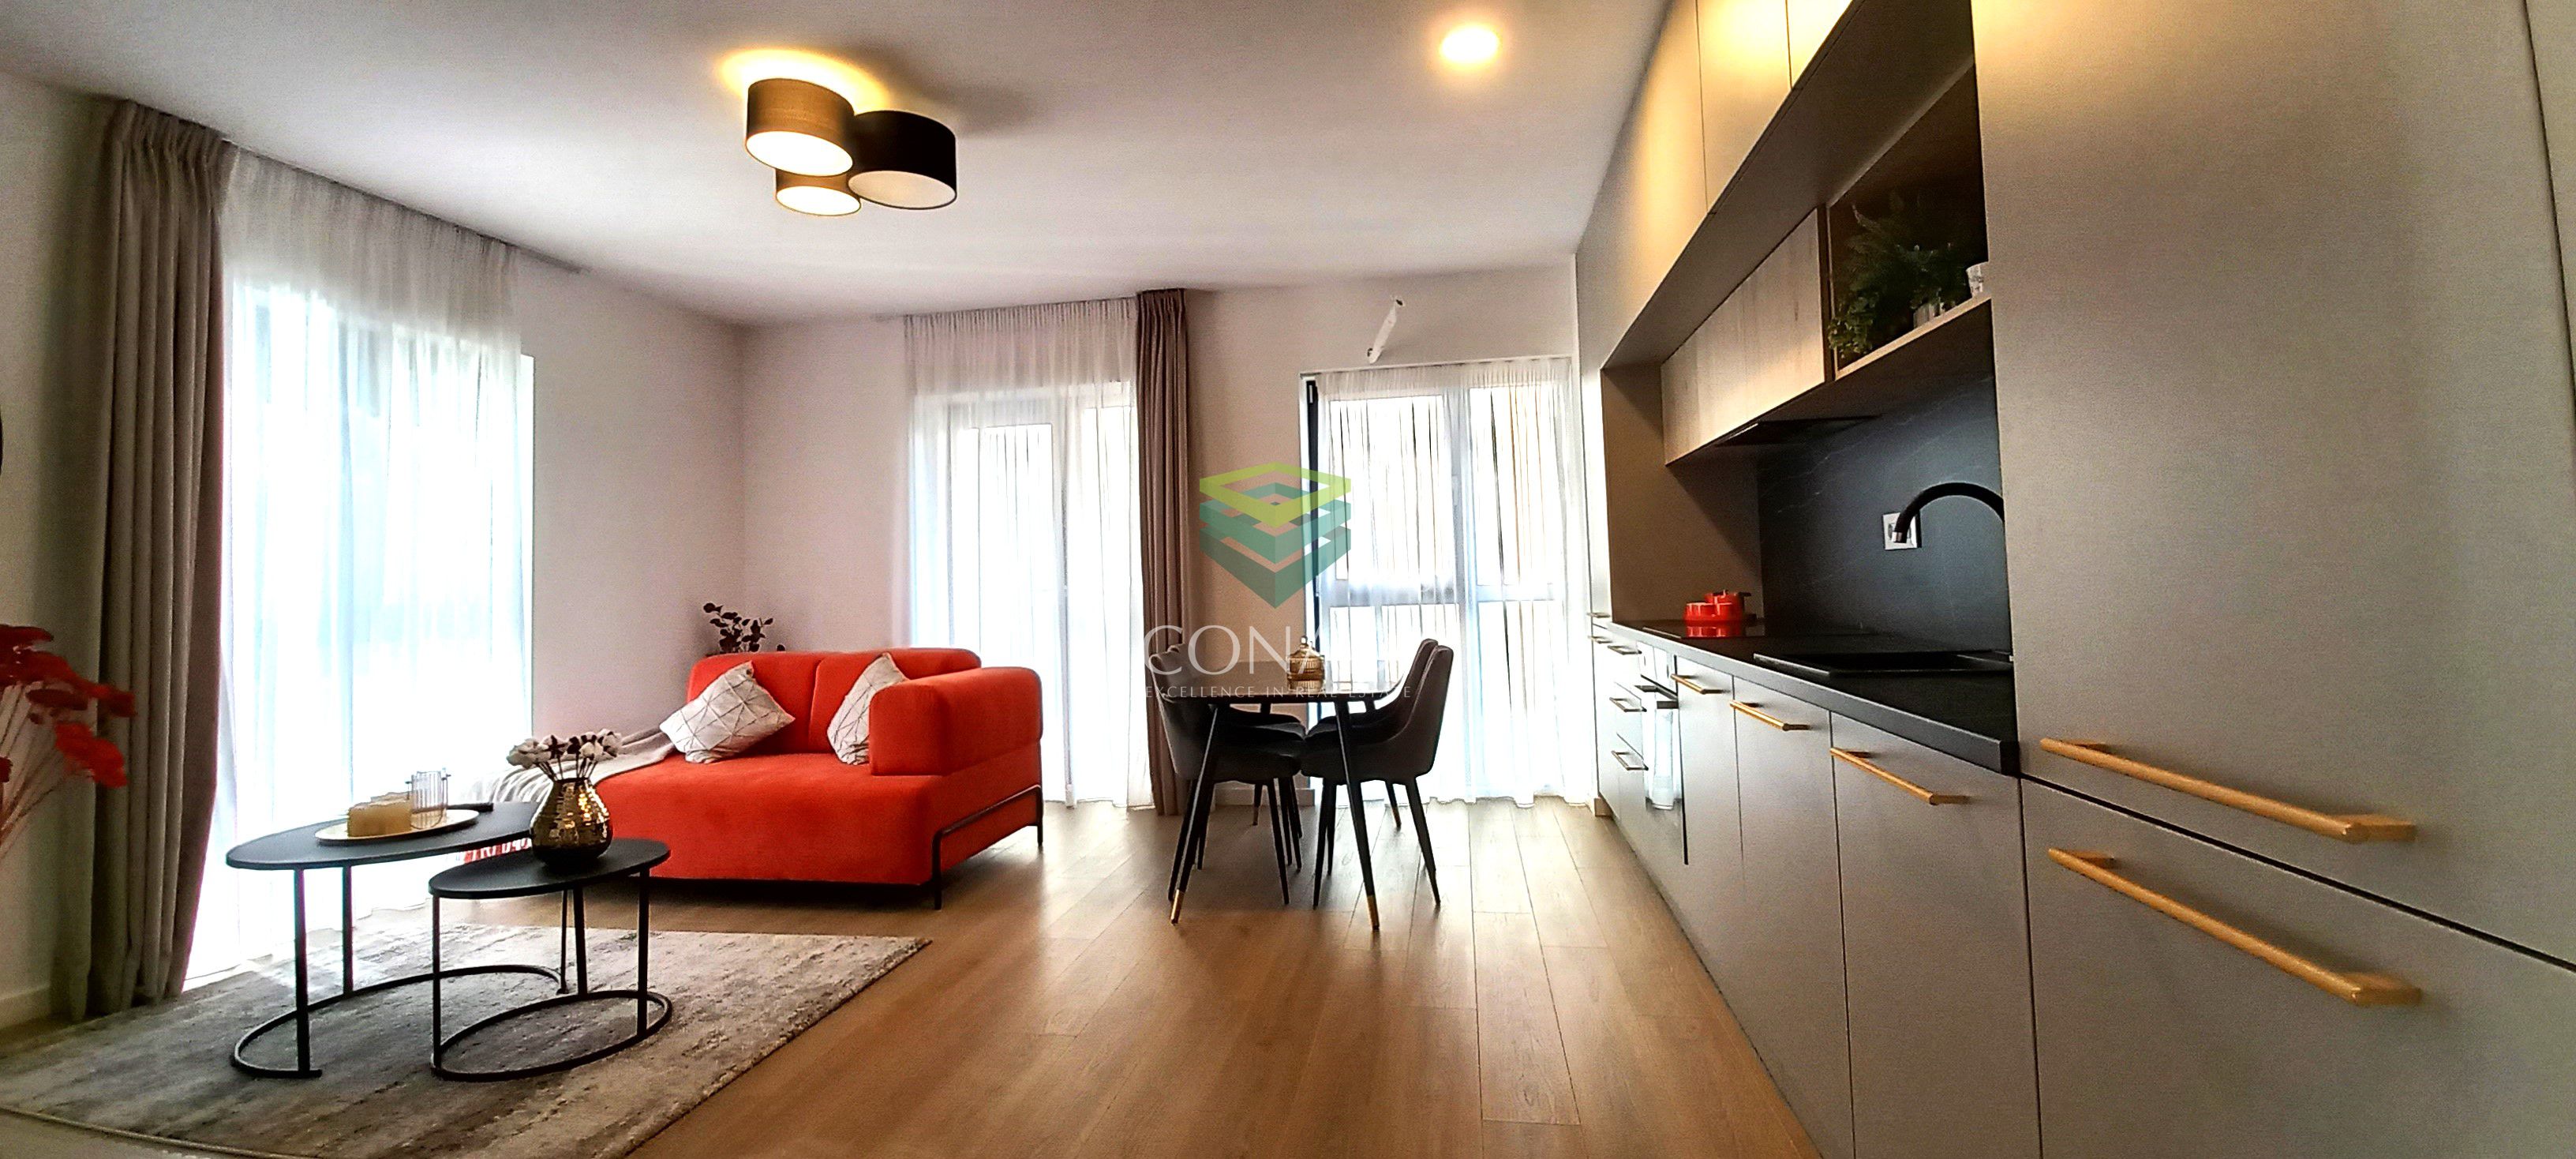 3-room apartment - Parcului 20 - VAT included